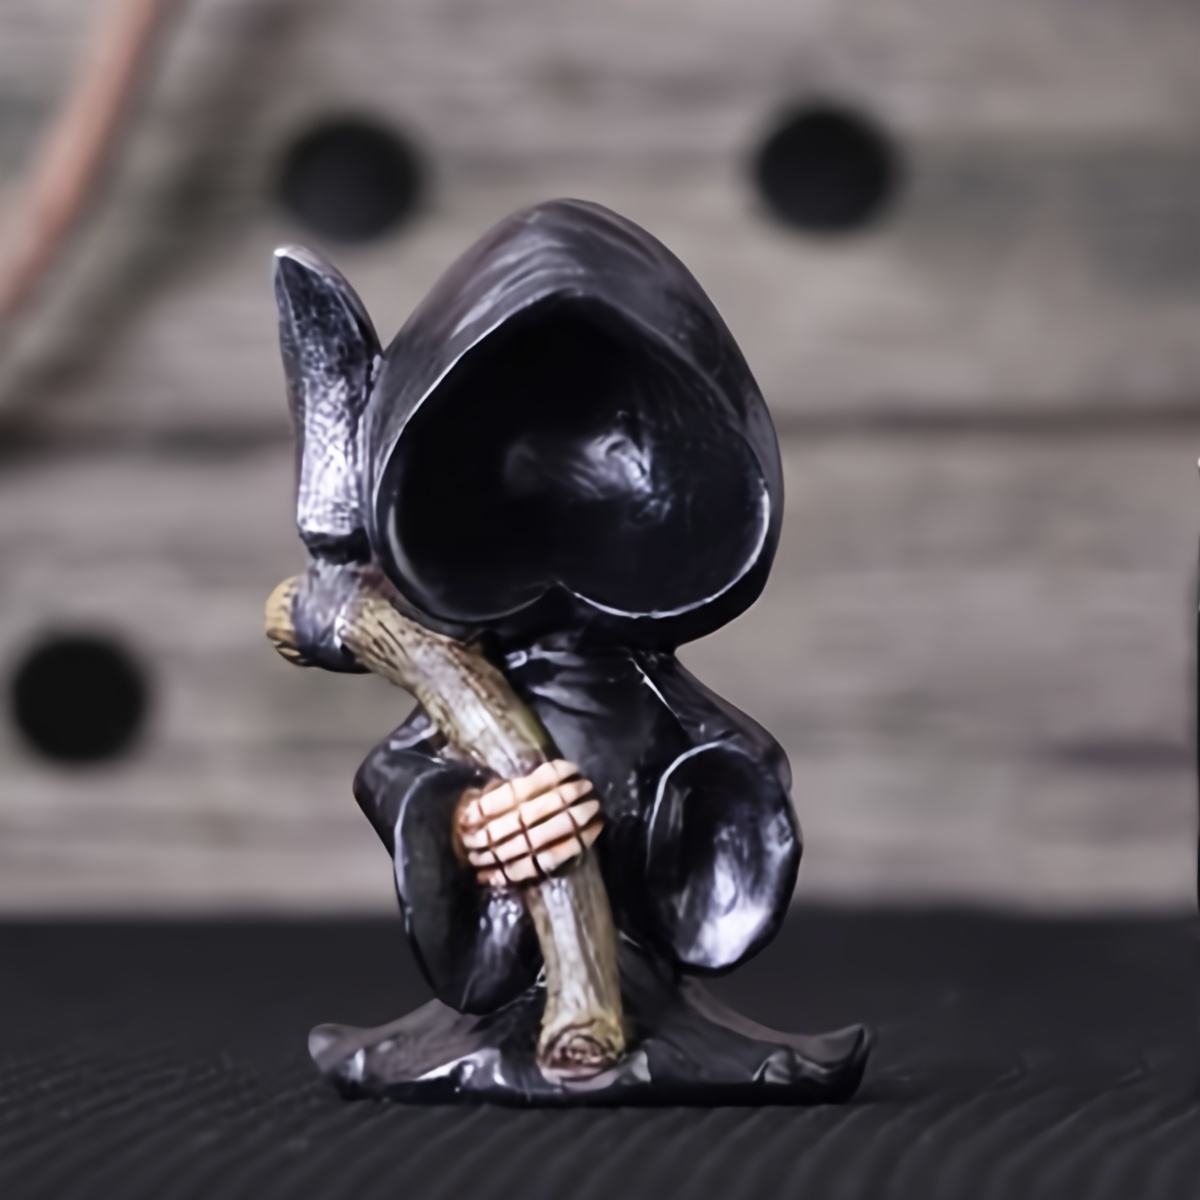 

1pc Resin Reaper Sickle Figurine - Versatile Desktop Decor For Home, Office, And Halloween